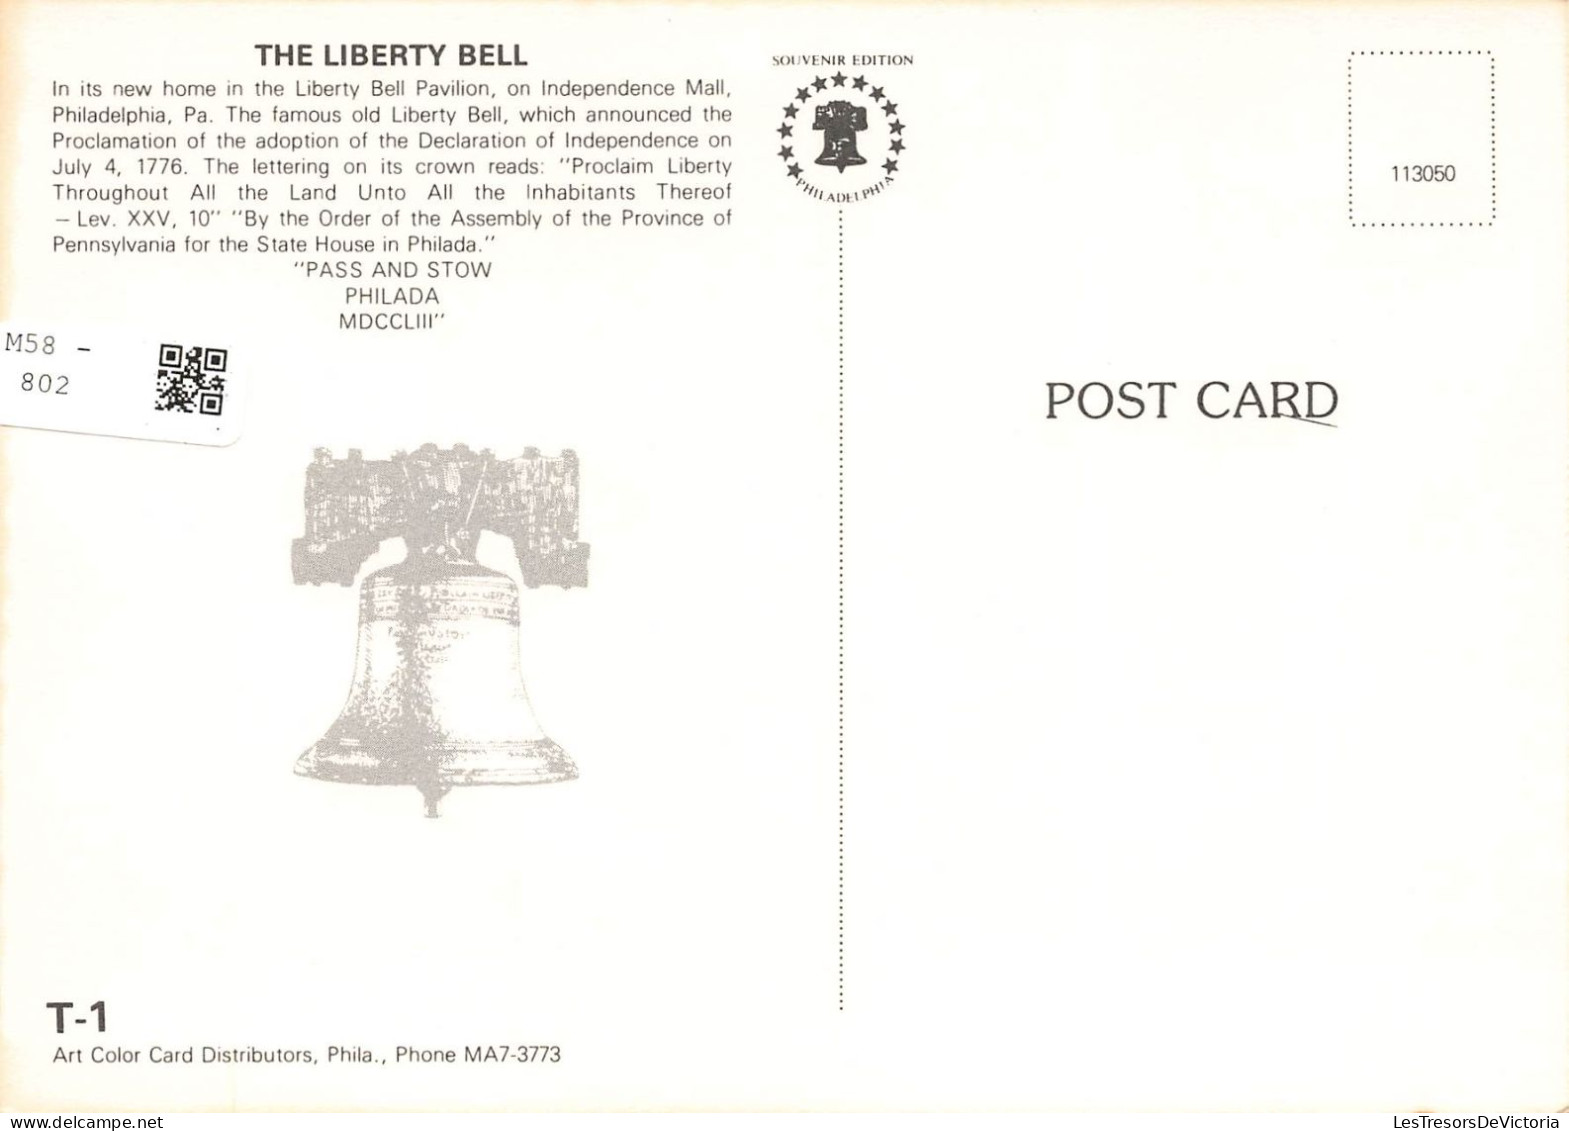 ETATS-UNIS - The Liberty Bell - Pass And Stow - Philada MdcclIII - Cloche - Philadelphia - Carte Postale - Philadelphia